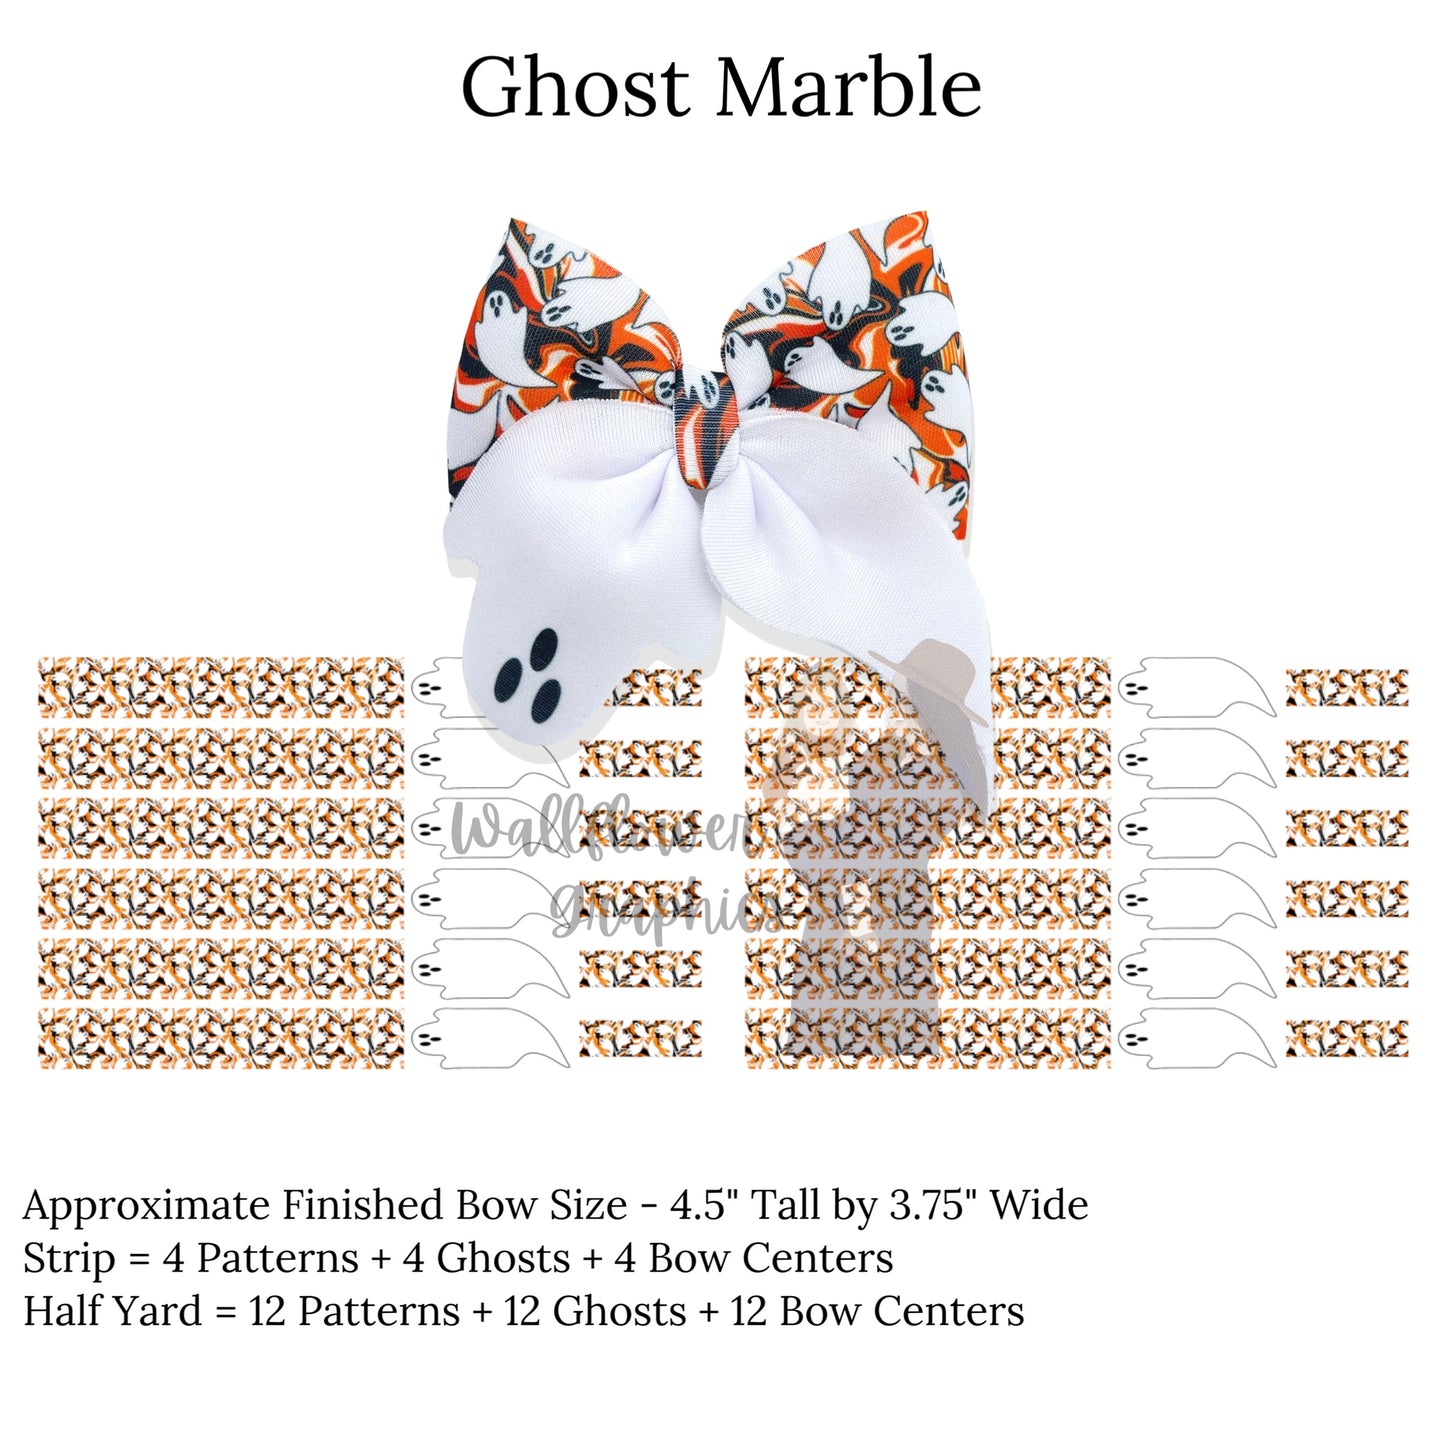 Wallflower graphics Halloween themed ghost neoprene sailor bows - ghost marble.